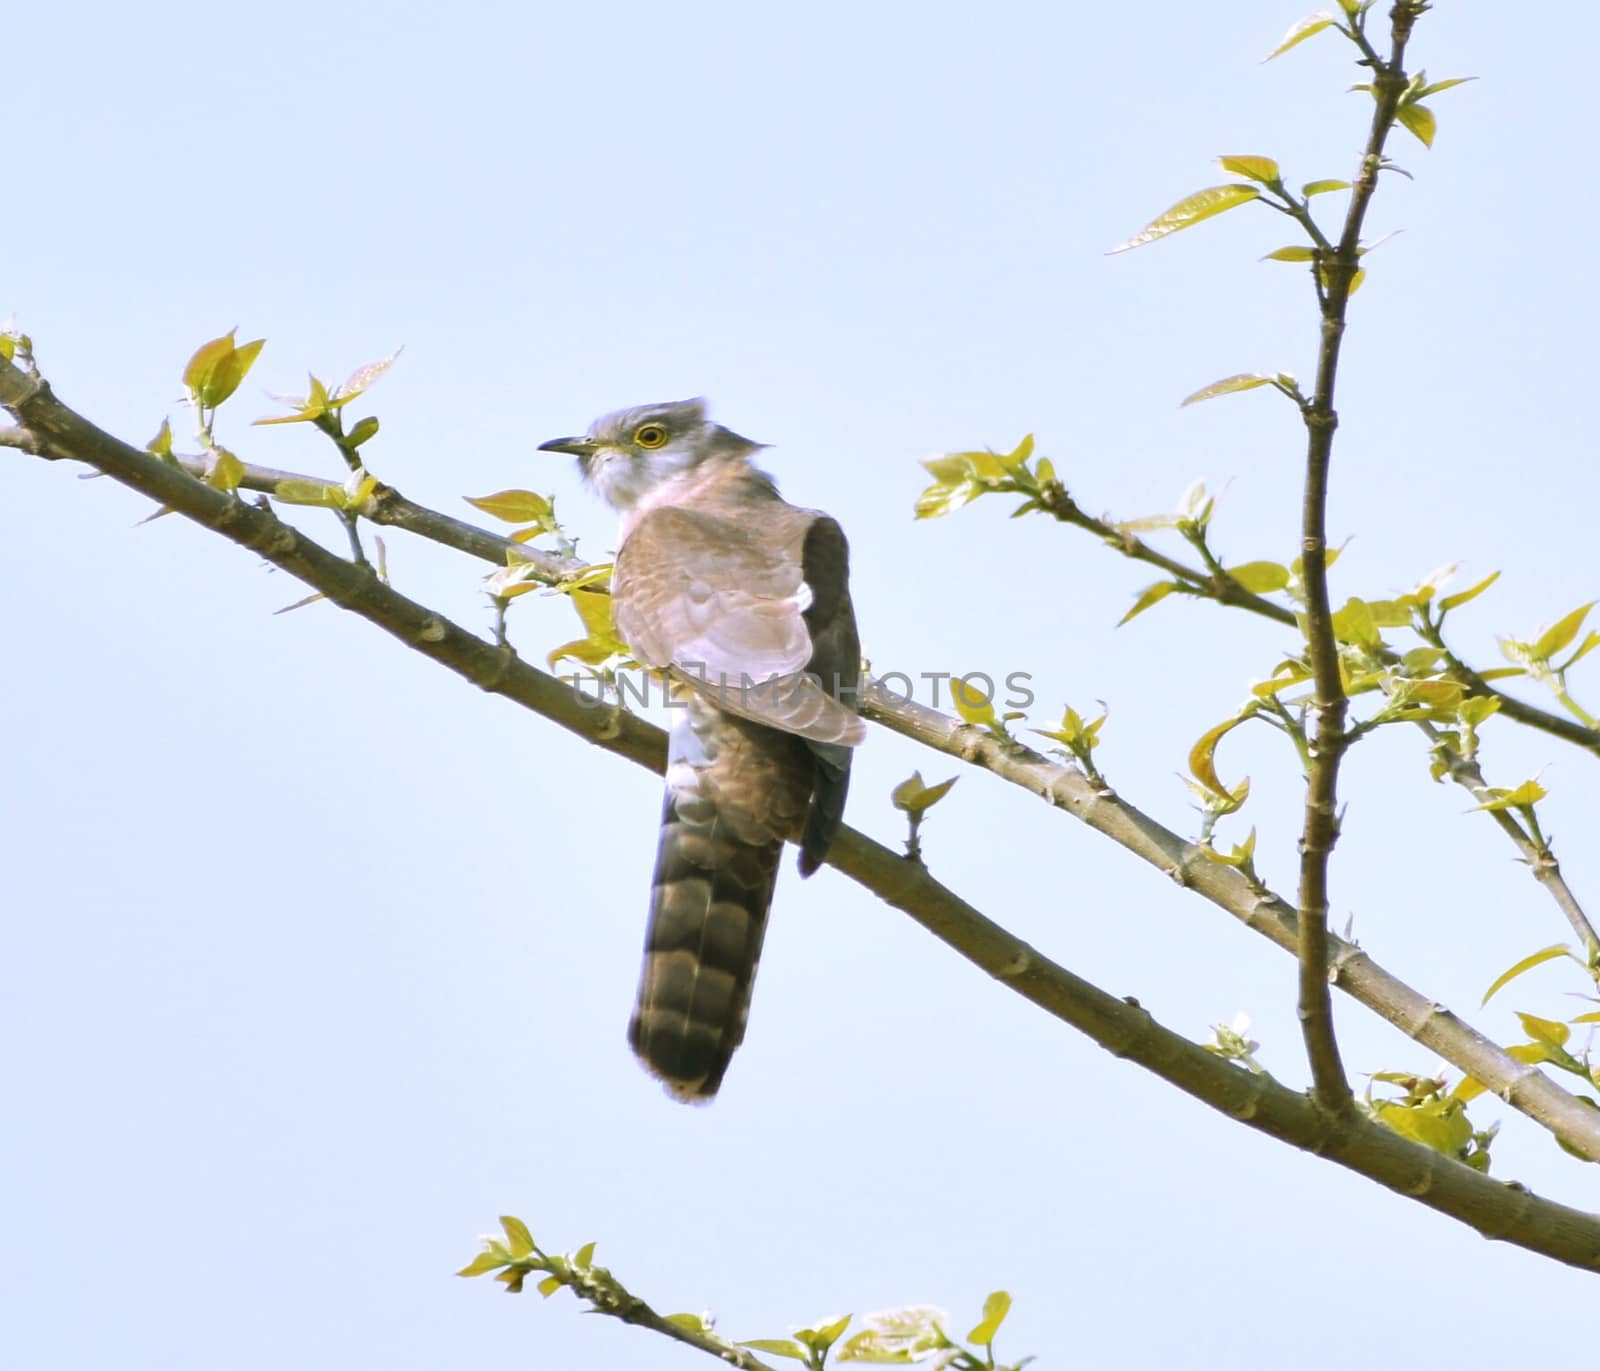 A common hawk cuckoo sitting on a tree branch by kundanmondal1999